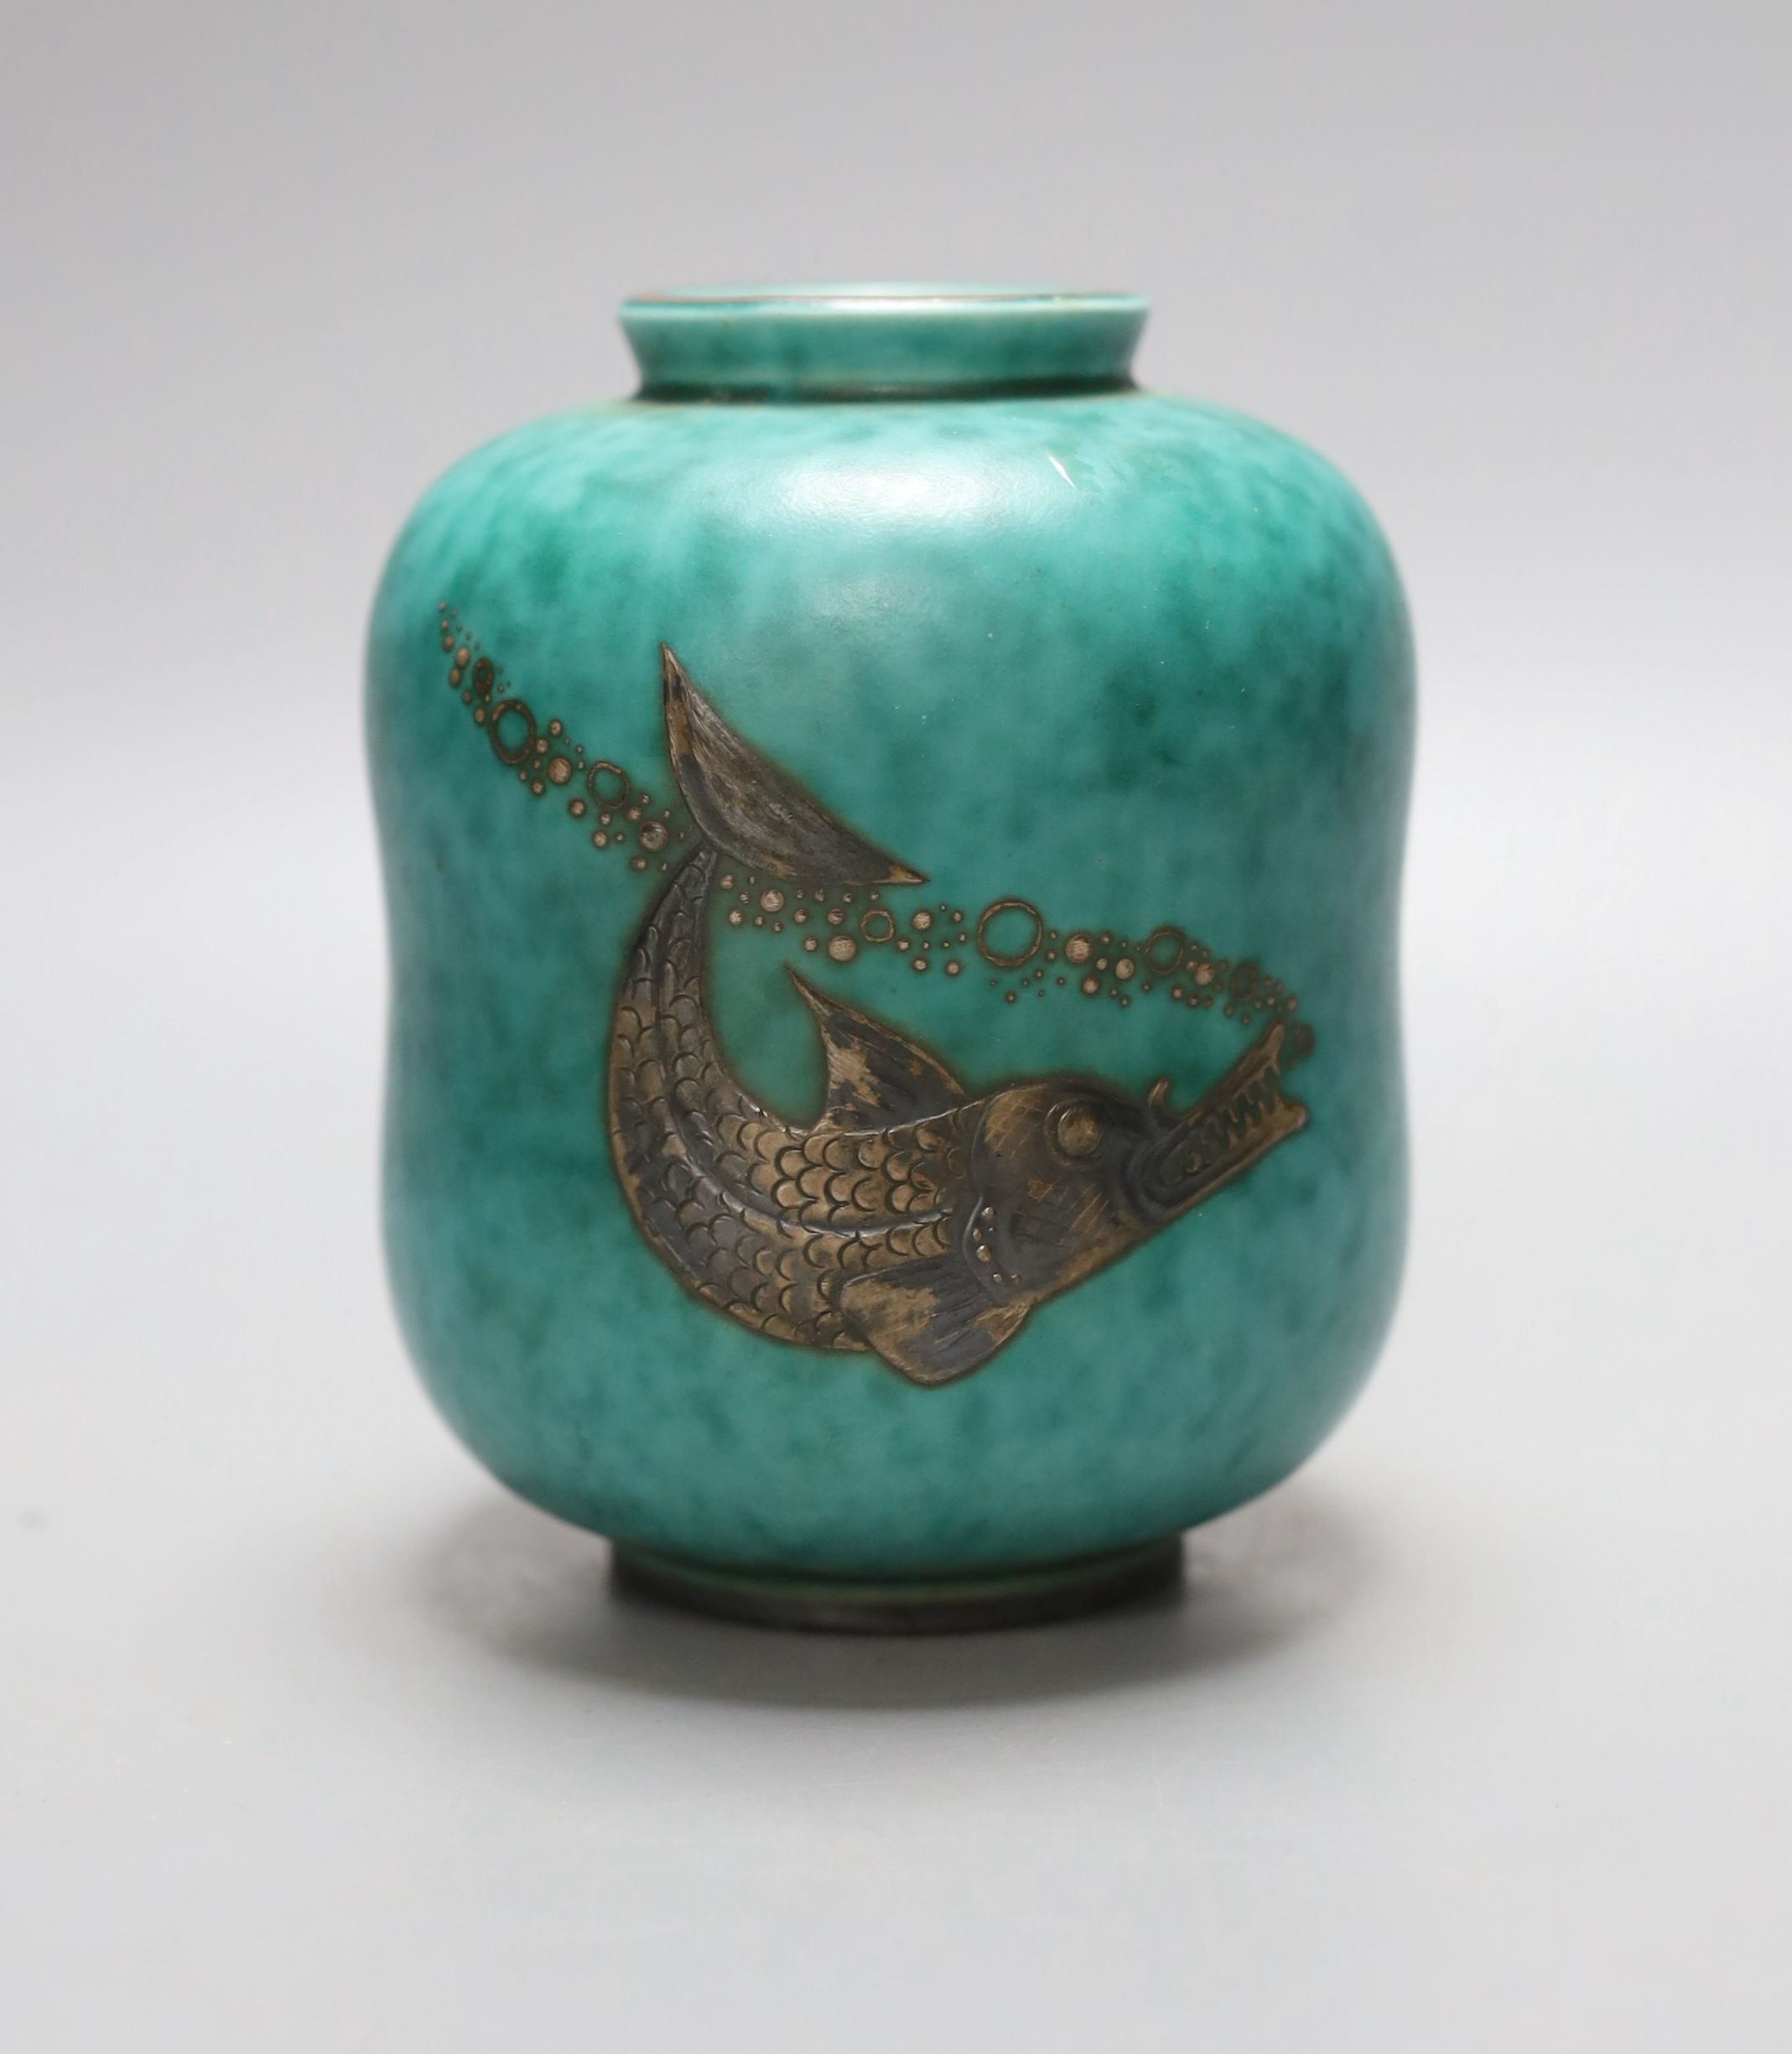 Willhelm Kage for Gustavsberg, a Swedish green glaze ‘Argenta’ ware vase, numbered 1079.1, 12cm tall